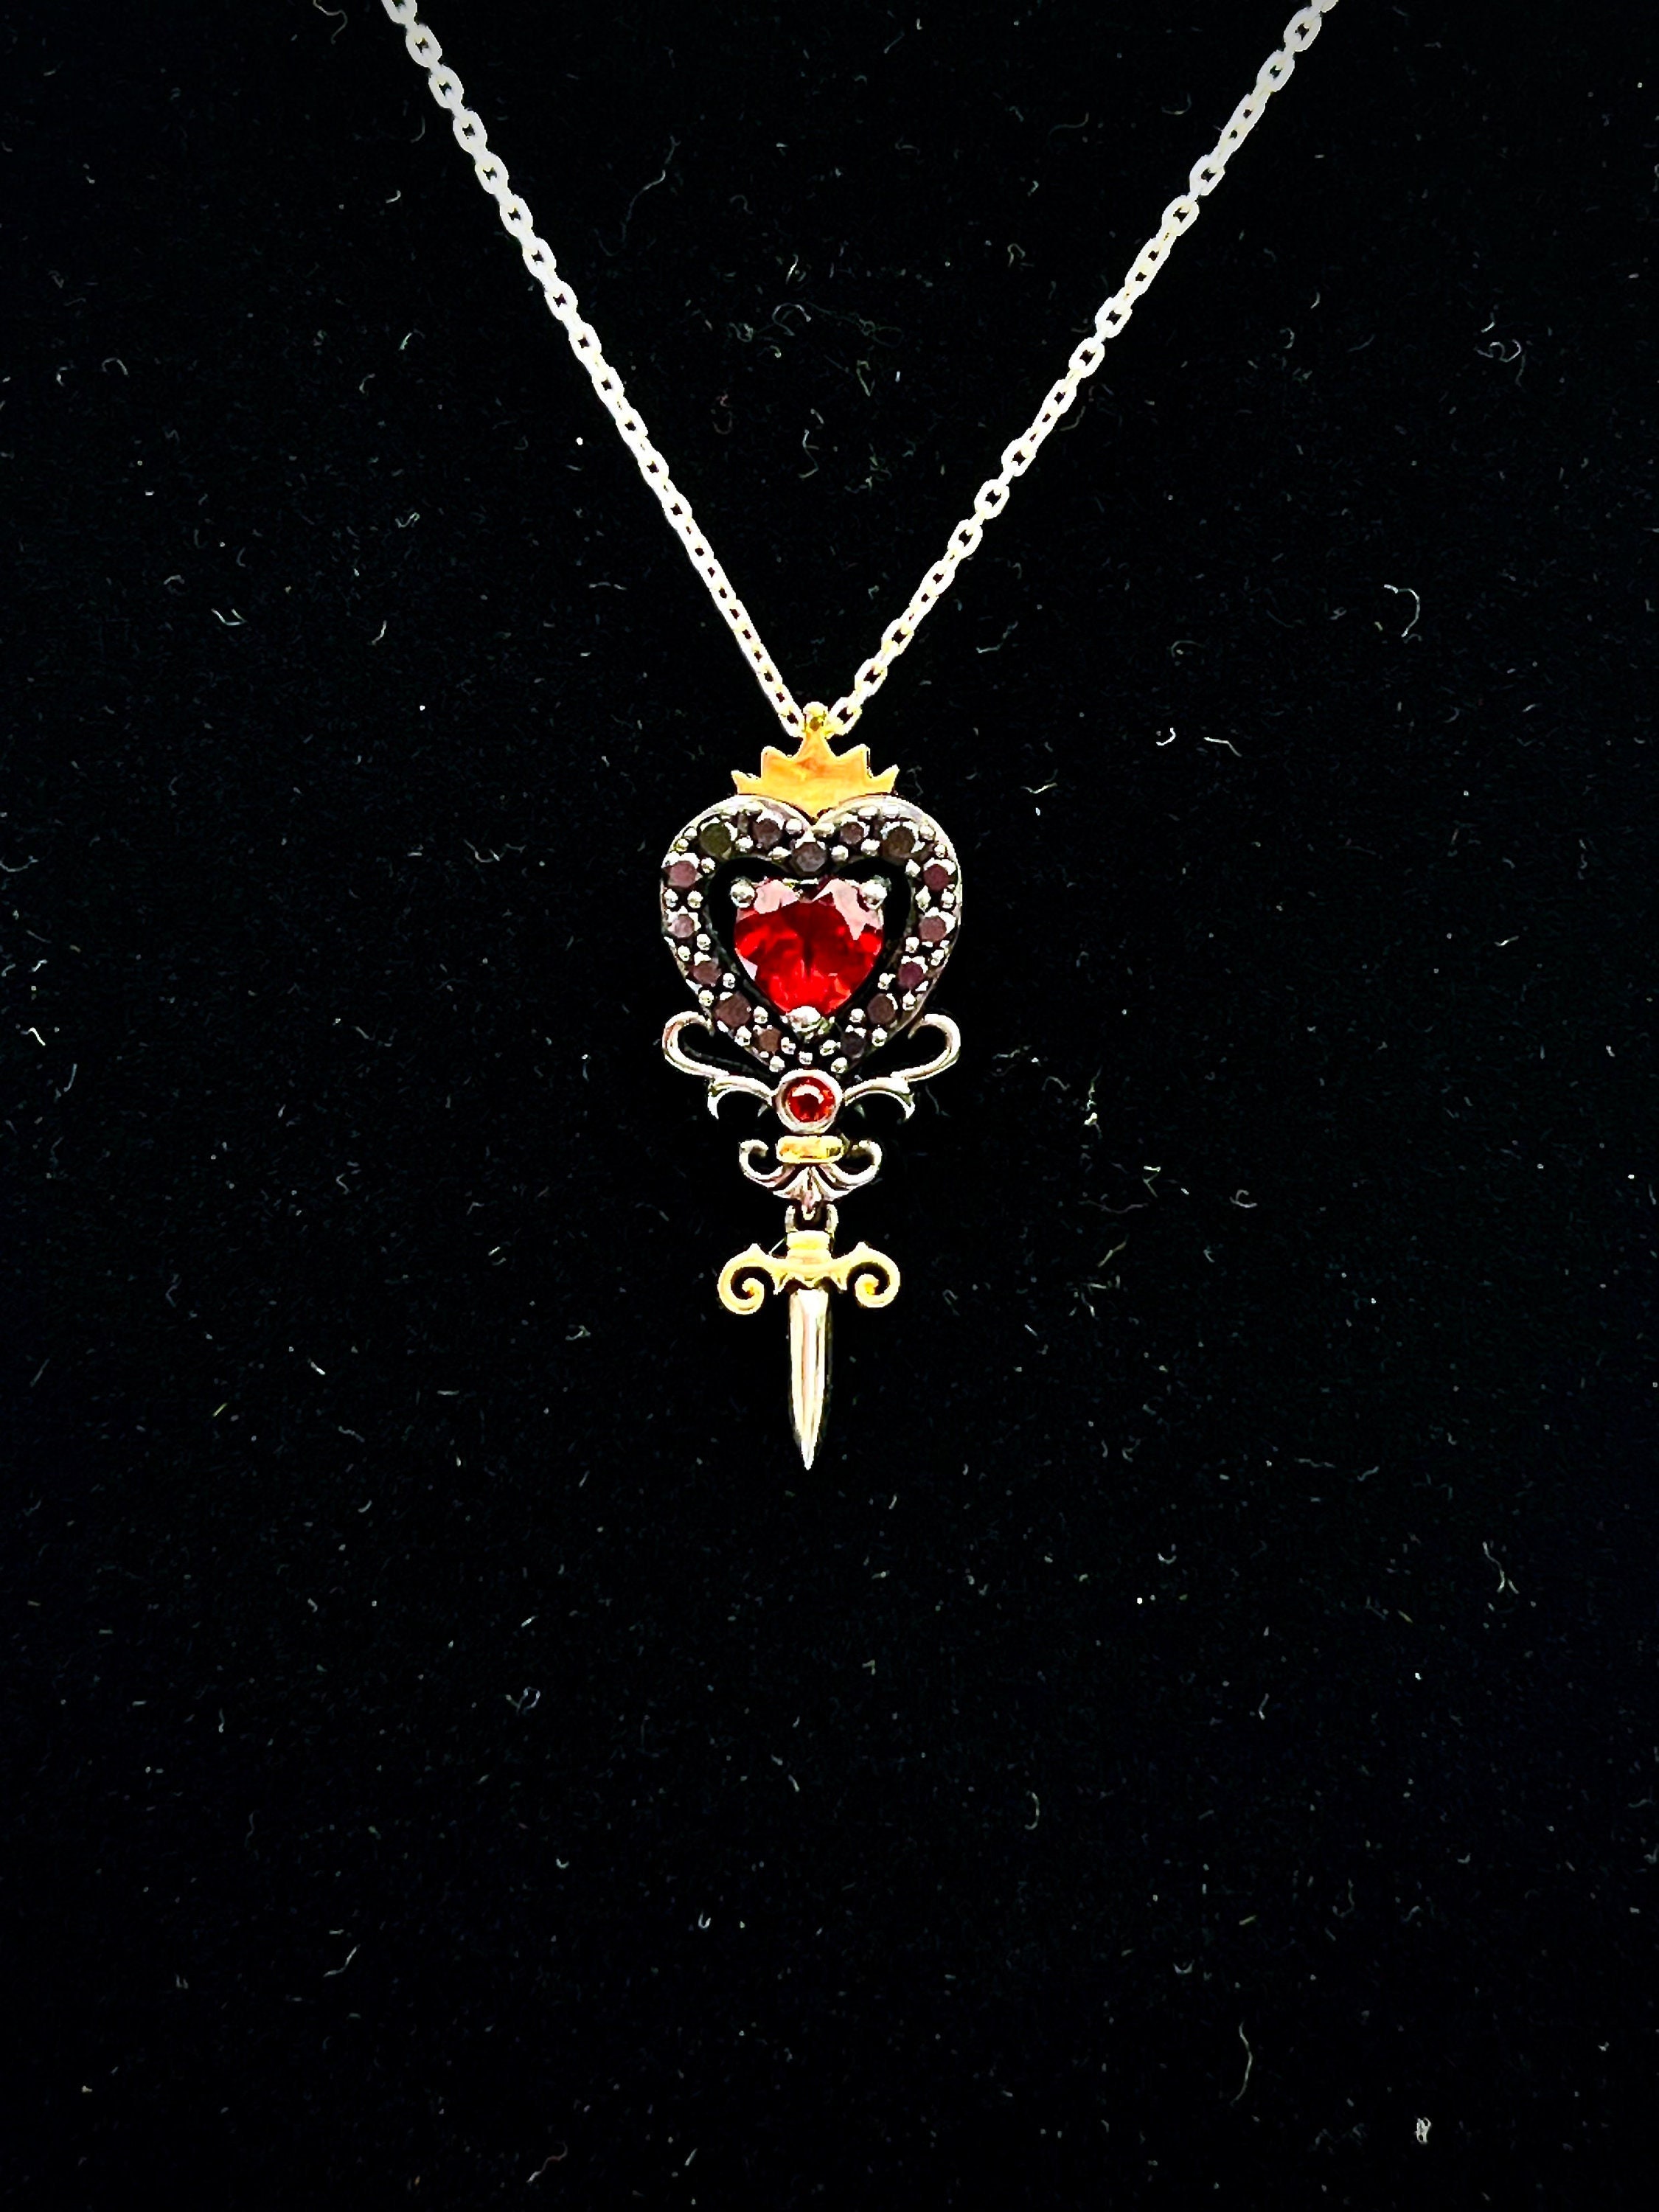 Vintage Snow White AAI Disney Necklace | eBay